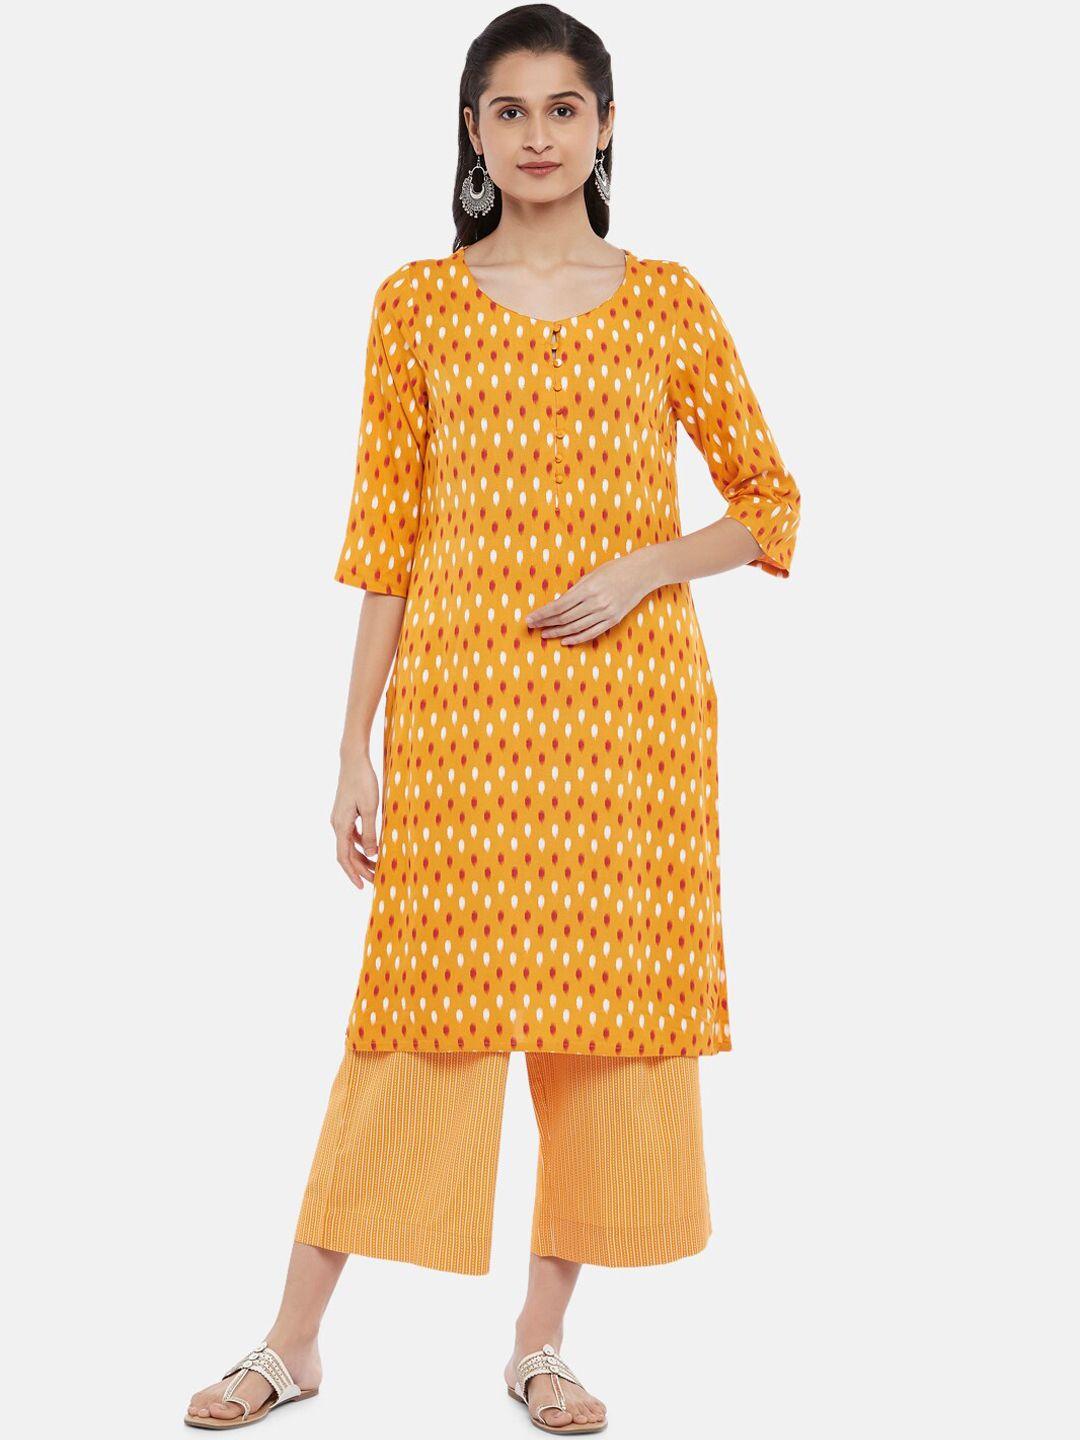 rangmanch by pantaloons women orange printed kurti with palazzos